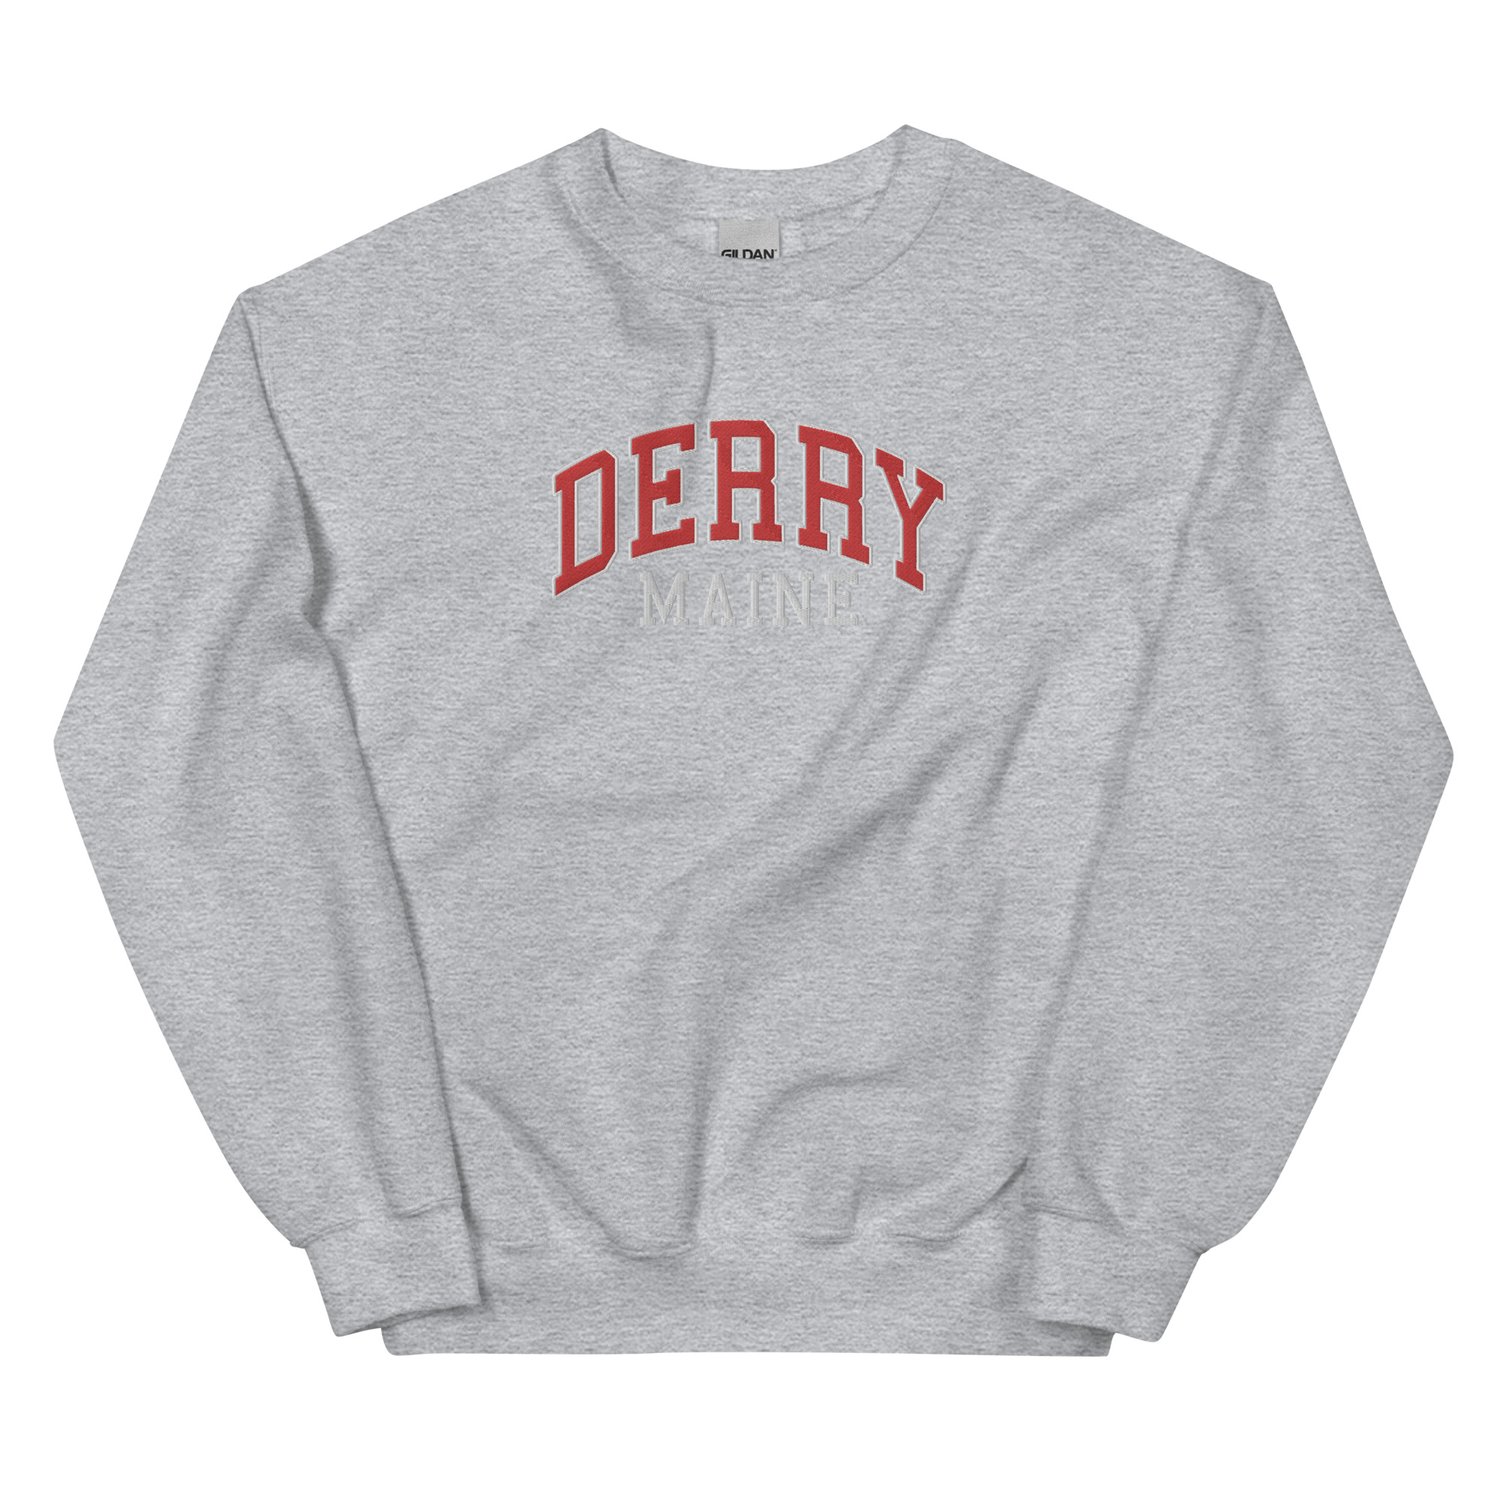 Image of Derry ME embroidered crew neck sweatshirt